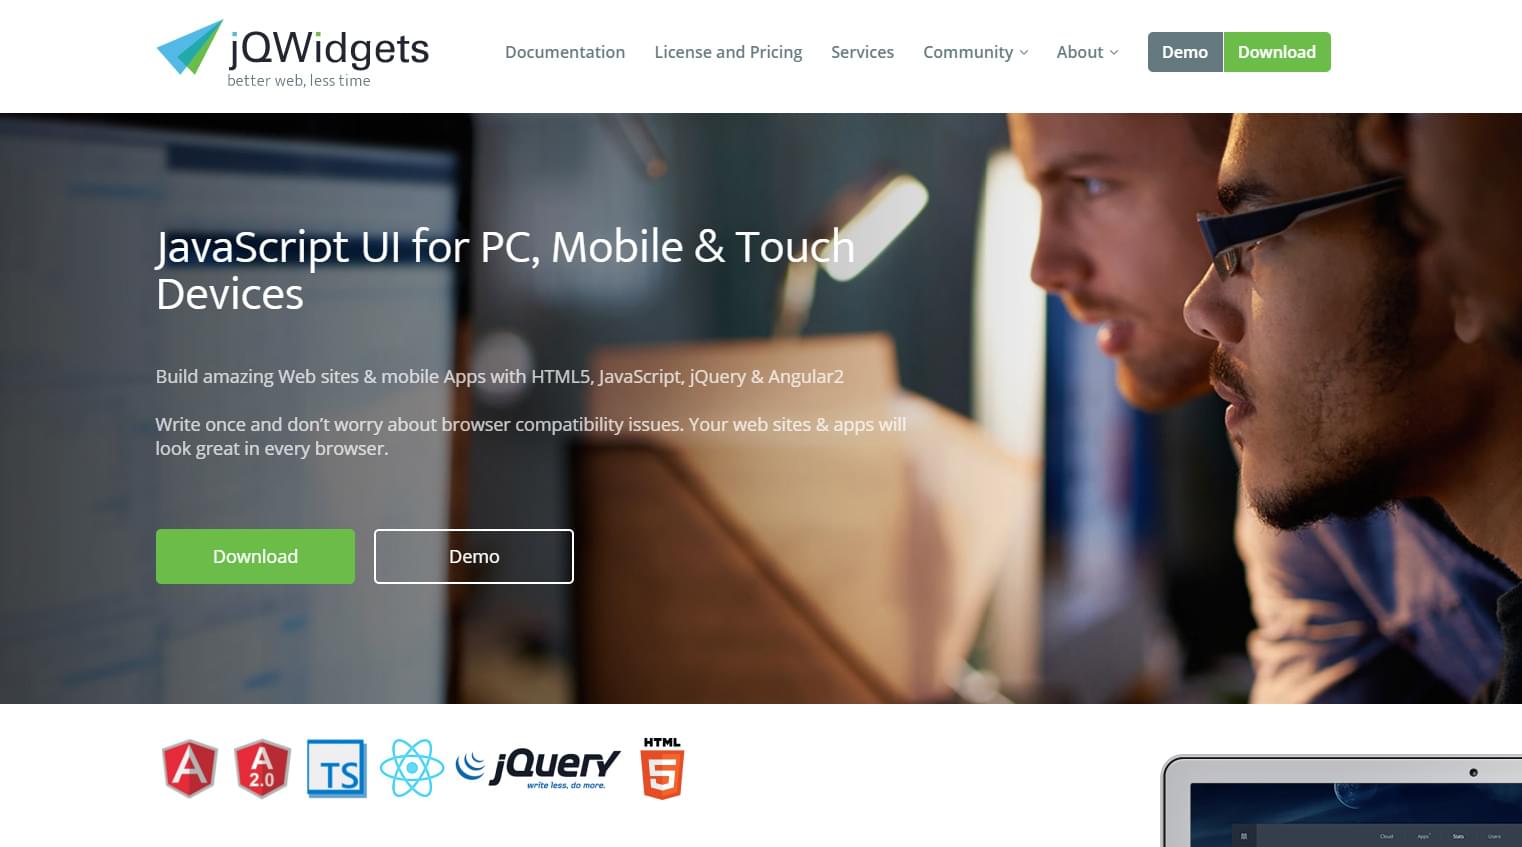 JQwidgets homepage intro image